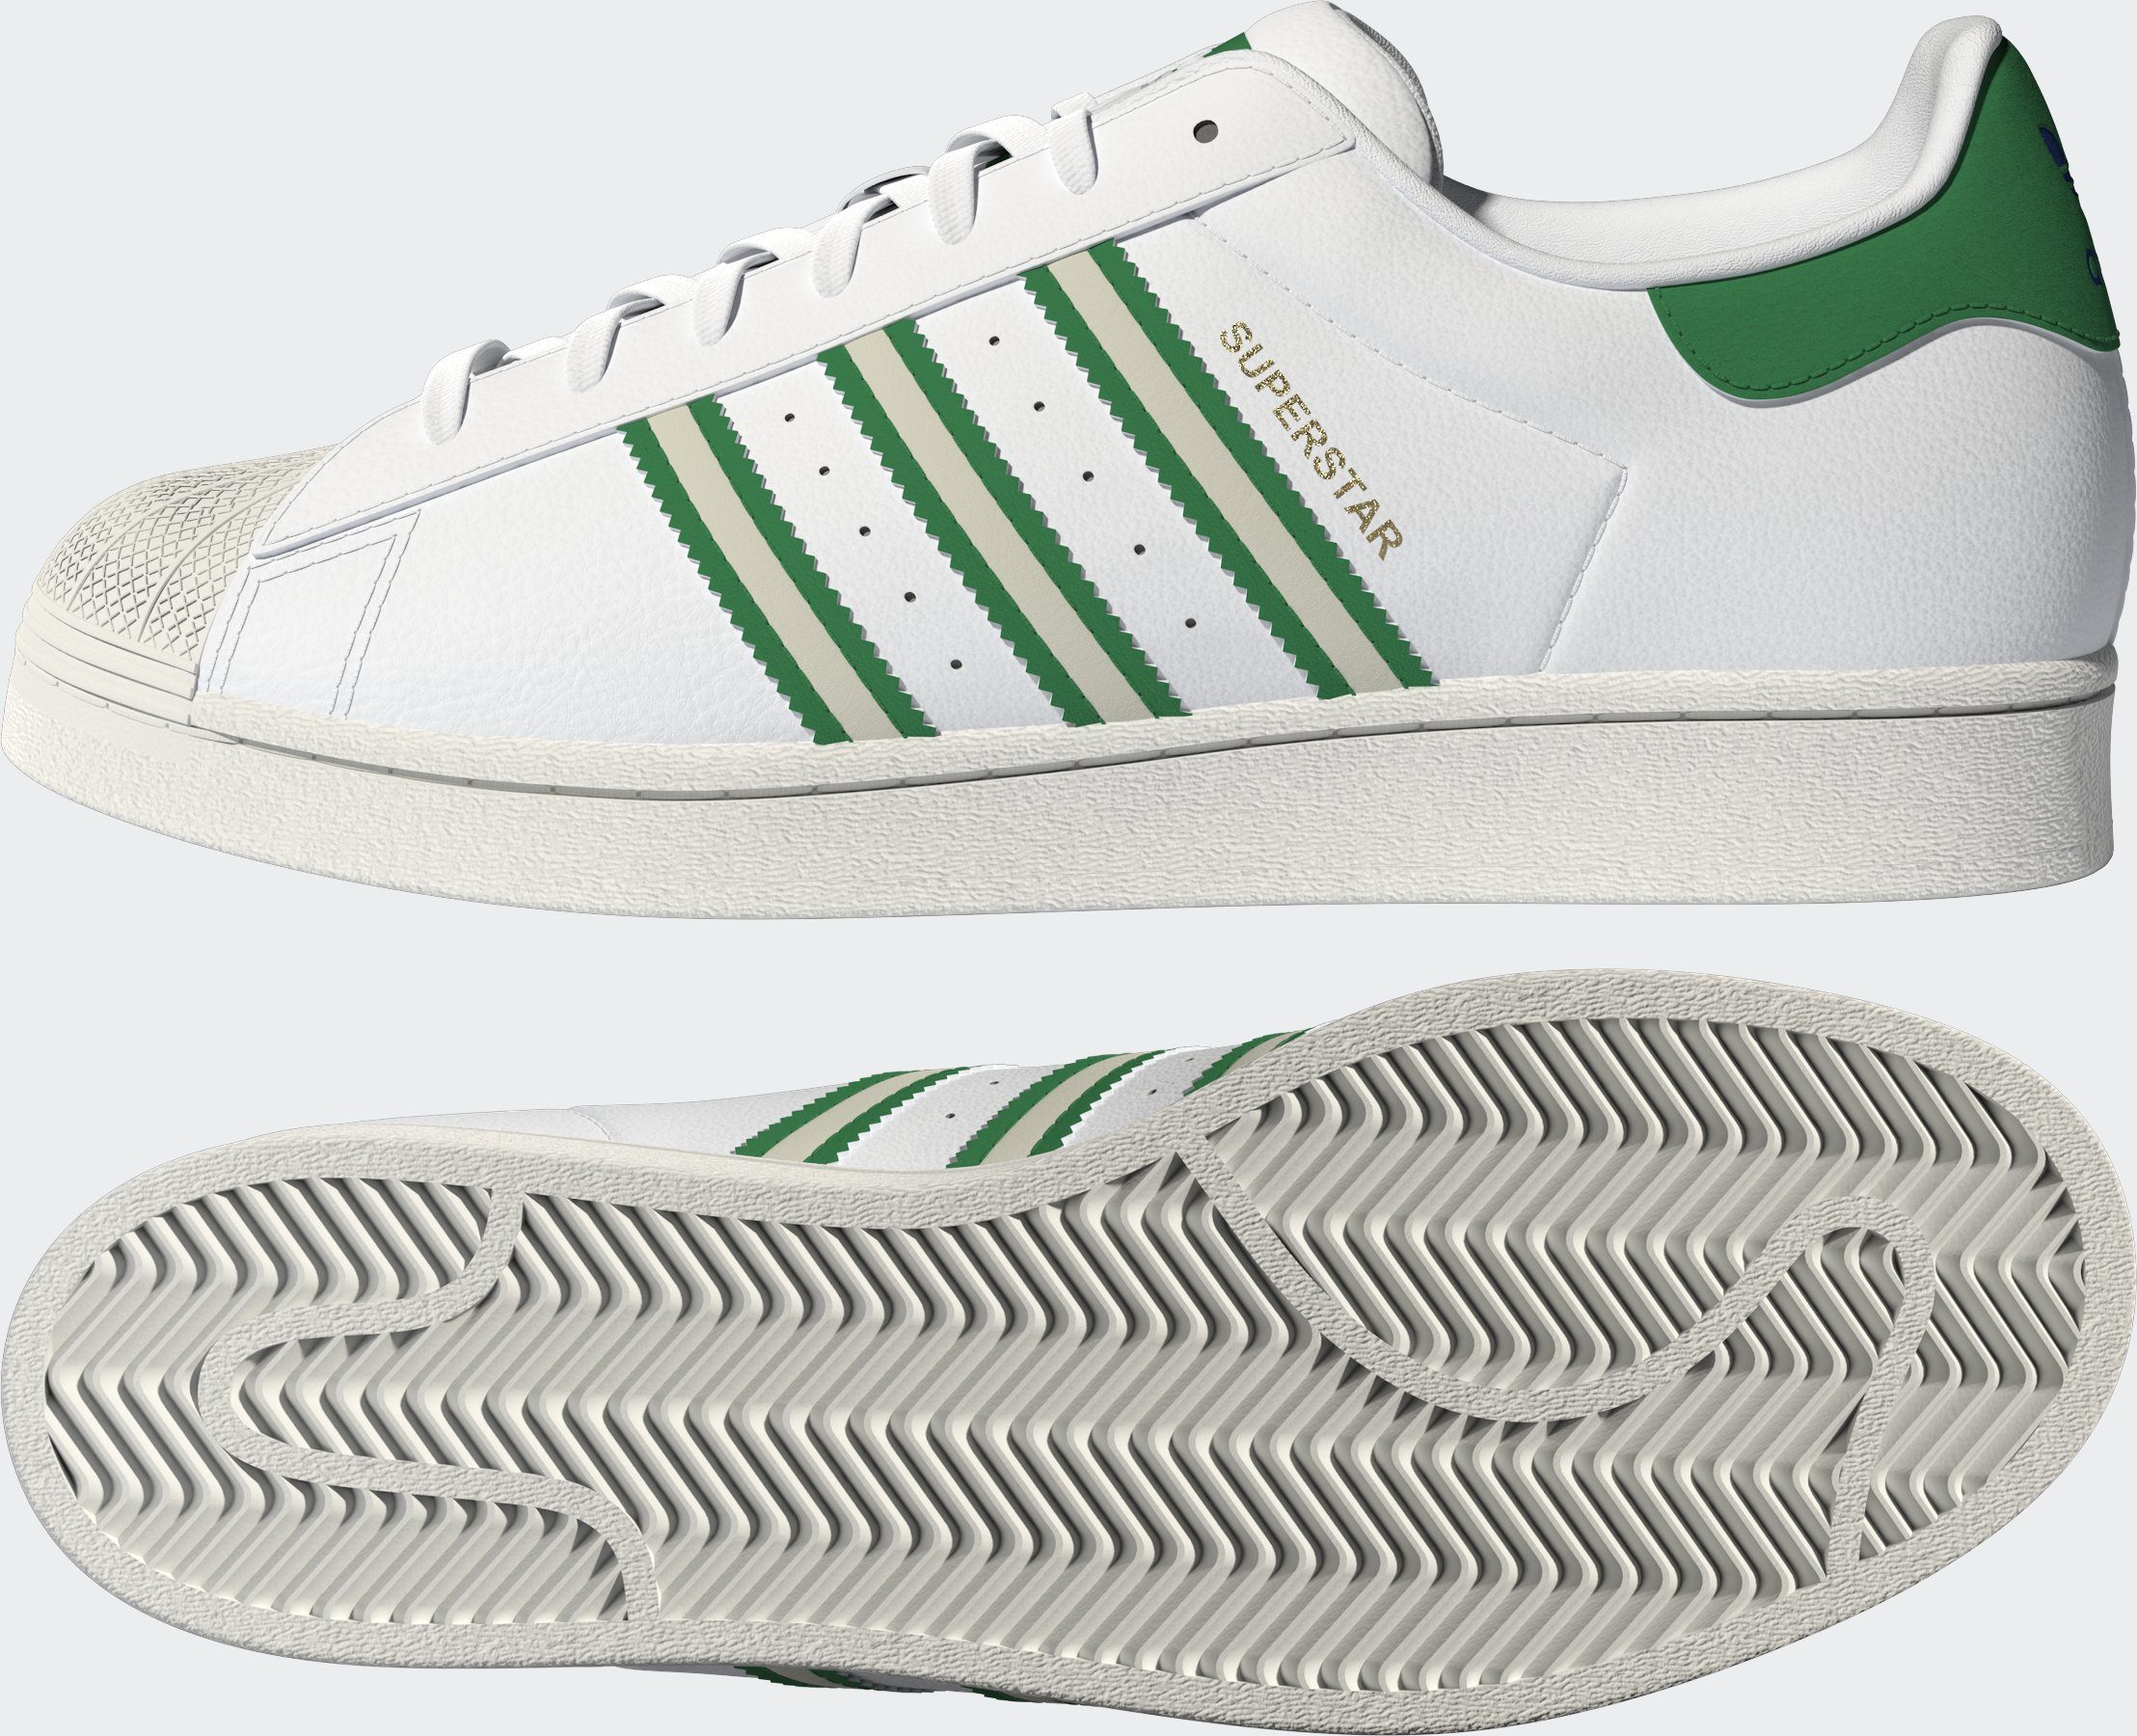 weiß-grün SUPERSTAR Originals adidas Sneaker